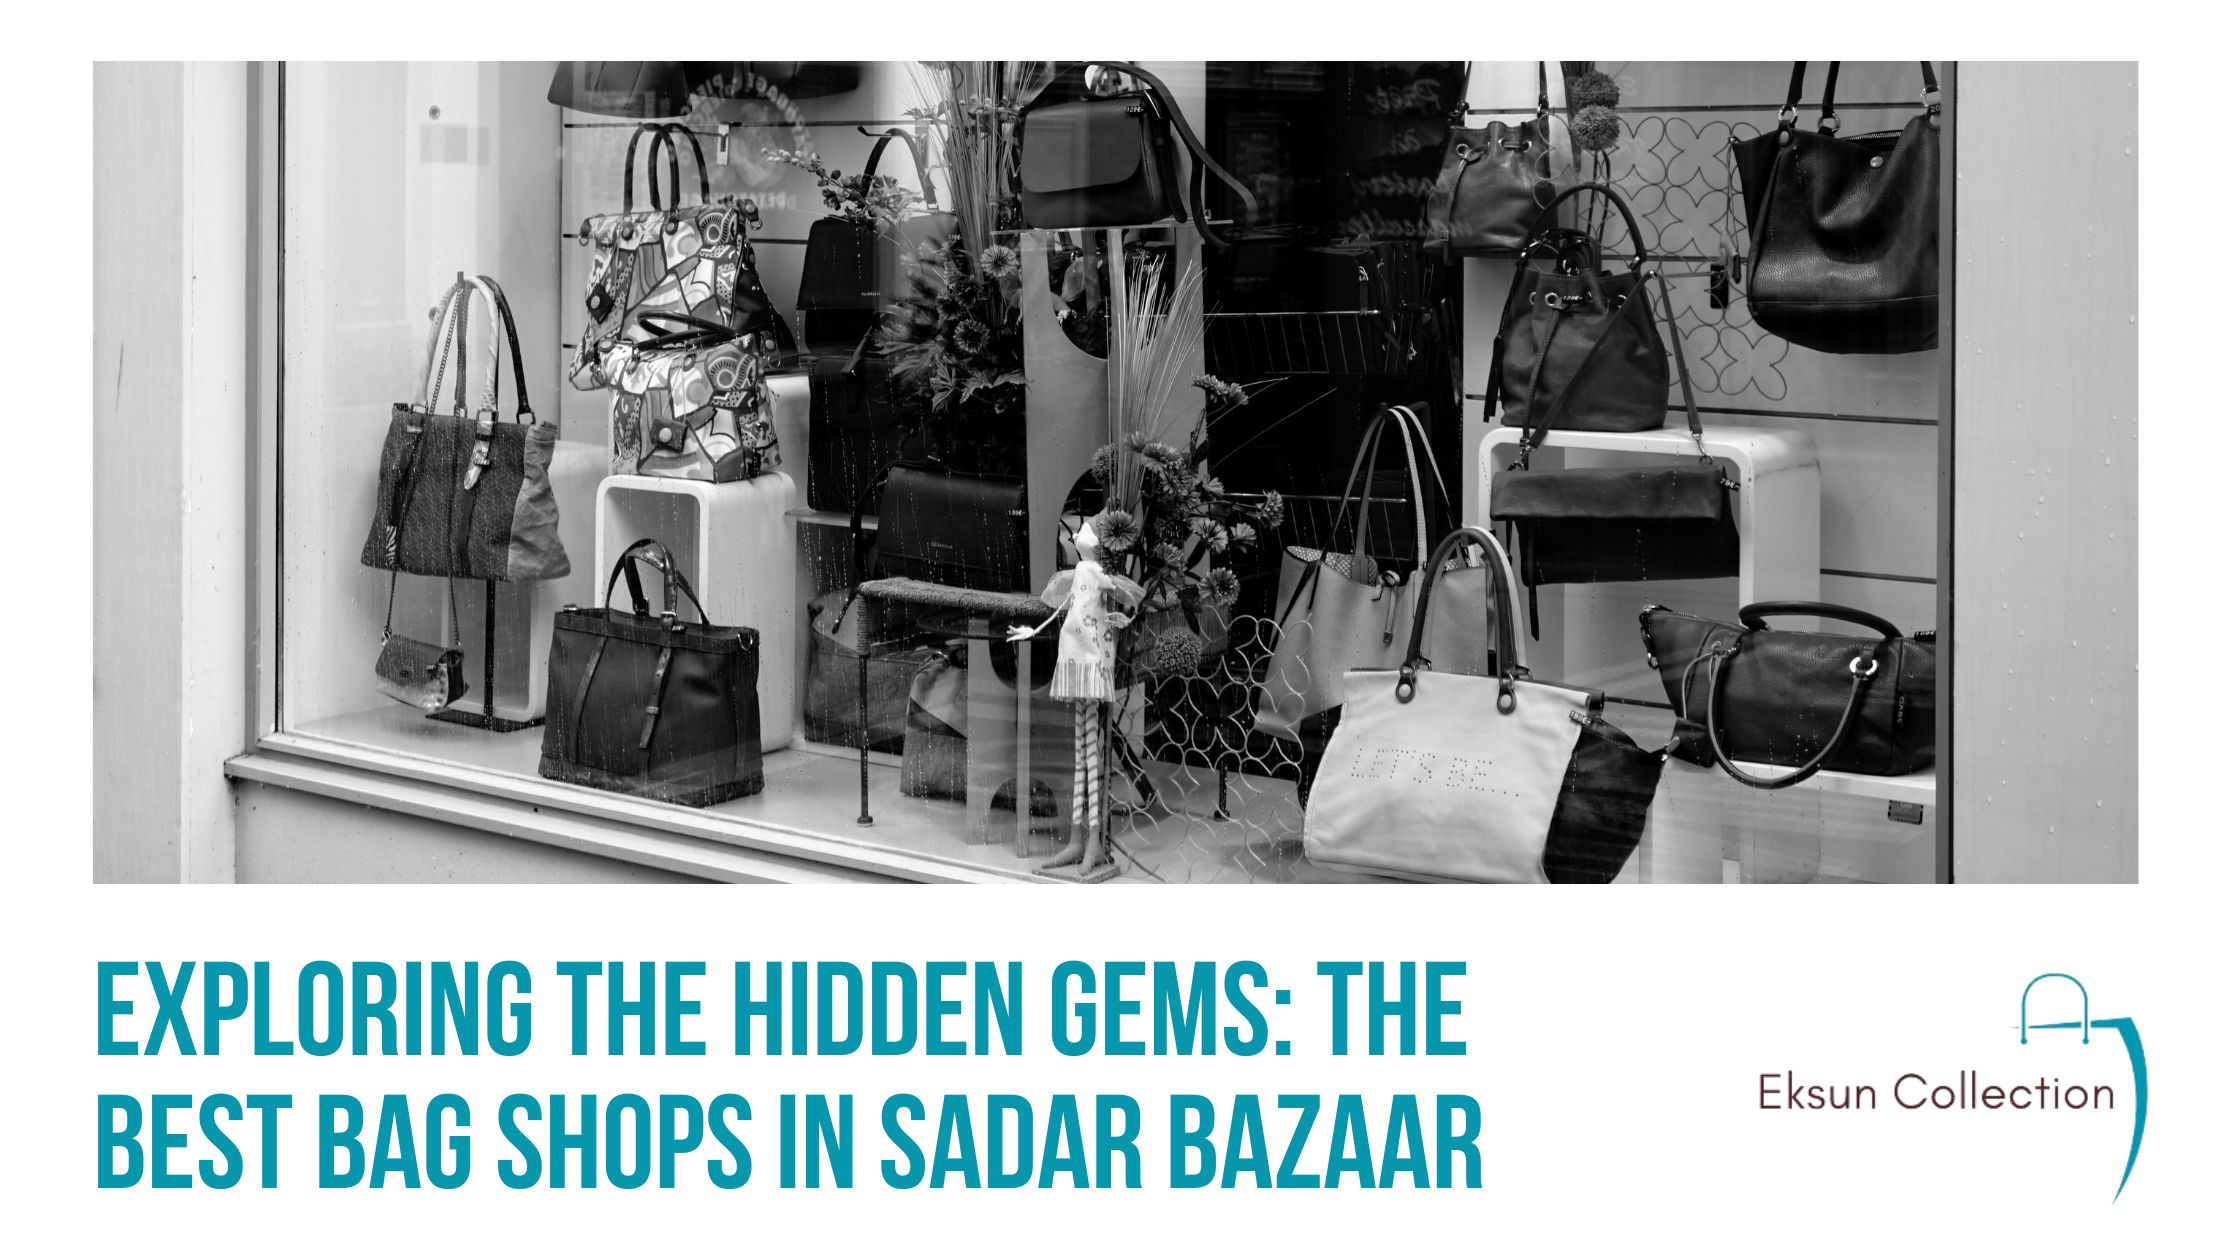 Harpers Bazaar best tote bags with zipper - KAAI Pyramid bag – Kaai Bags |  North America